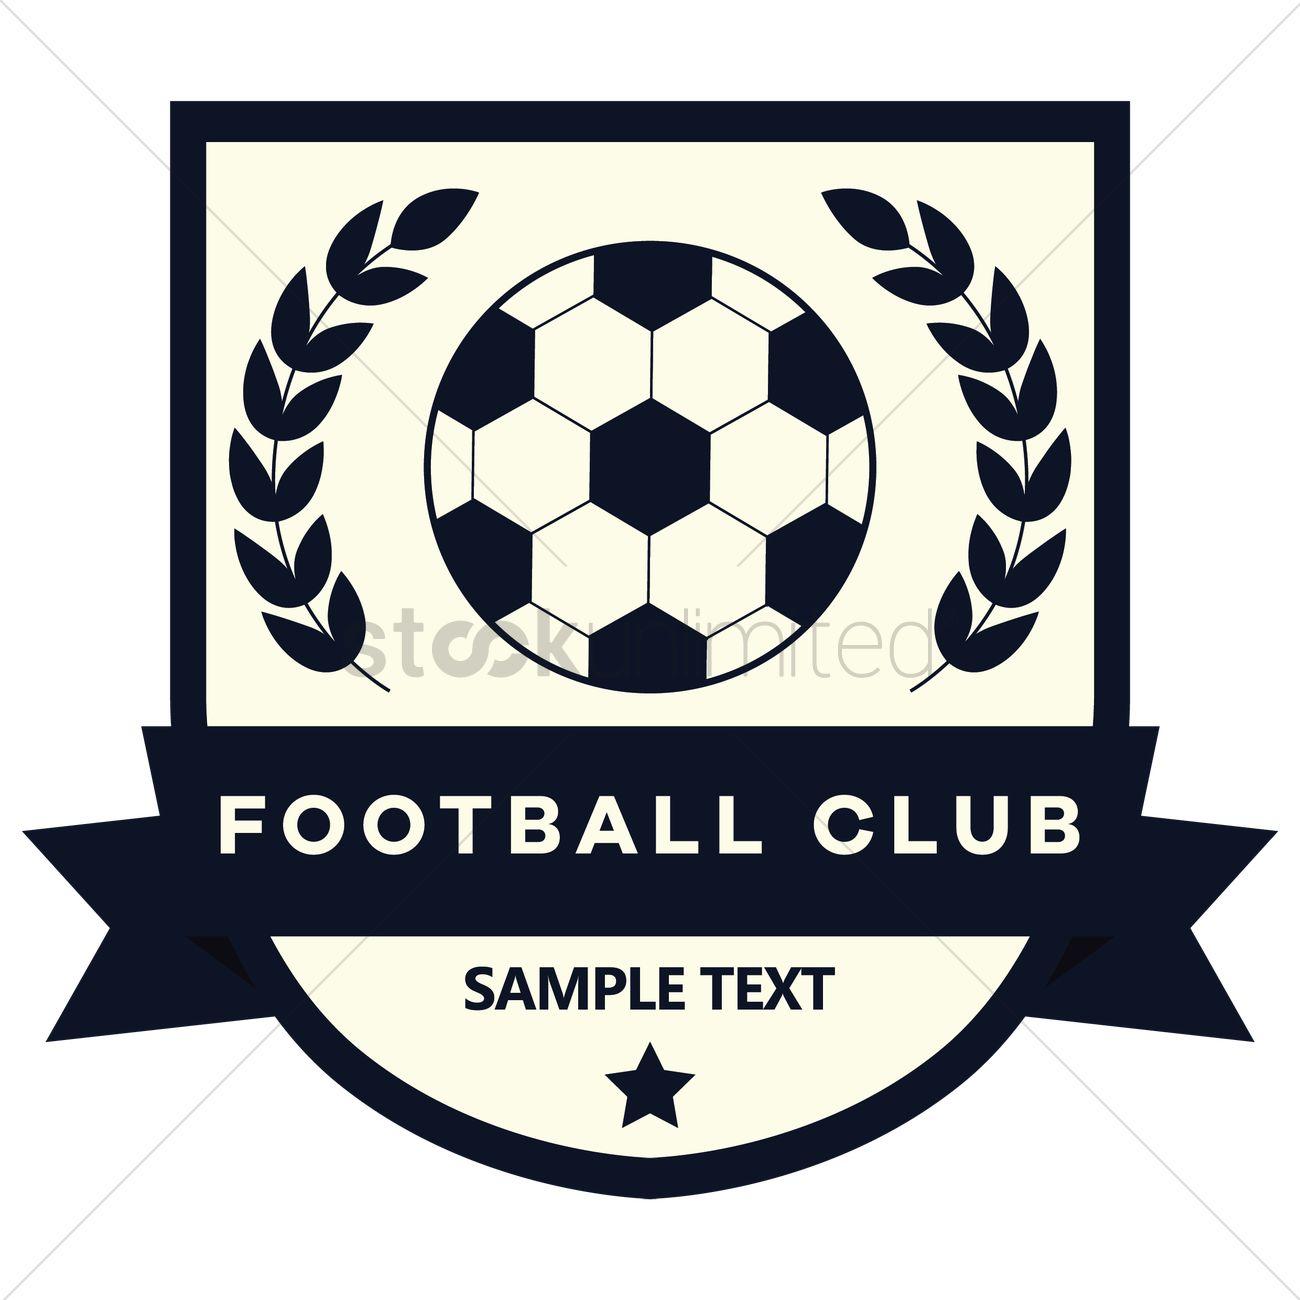 Clubs Logo - Football club logo Vector Image